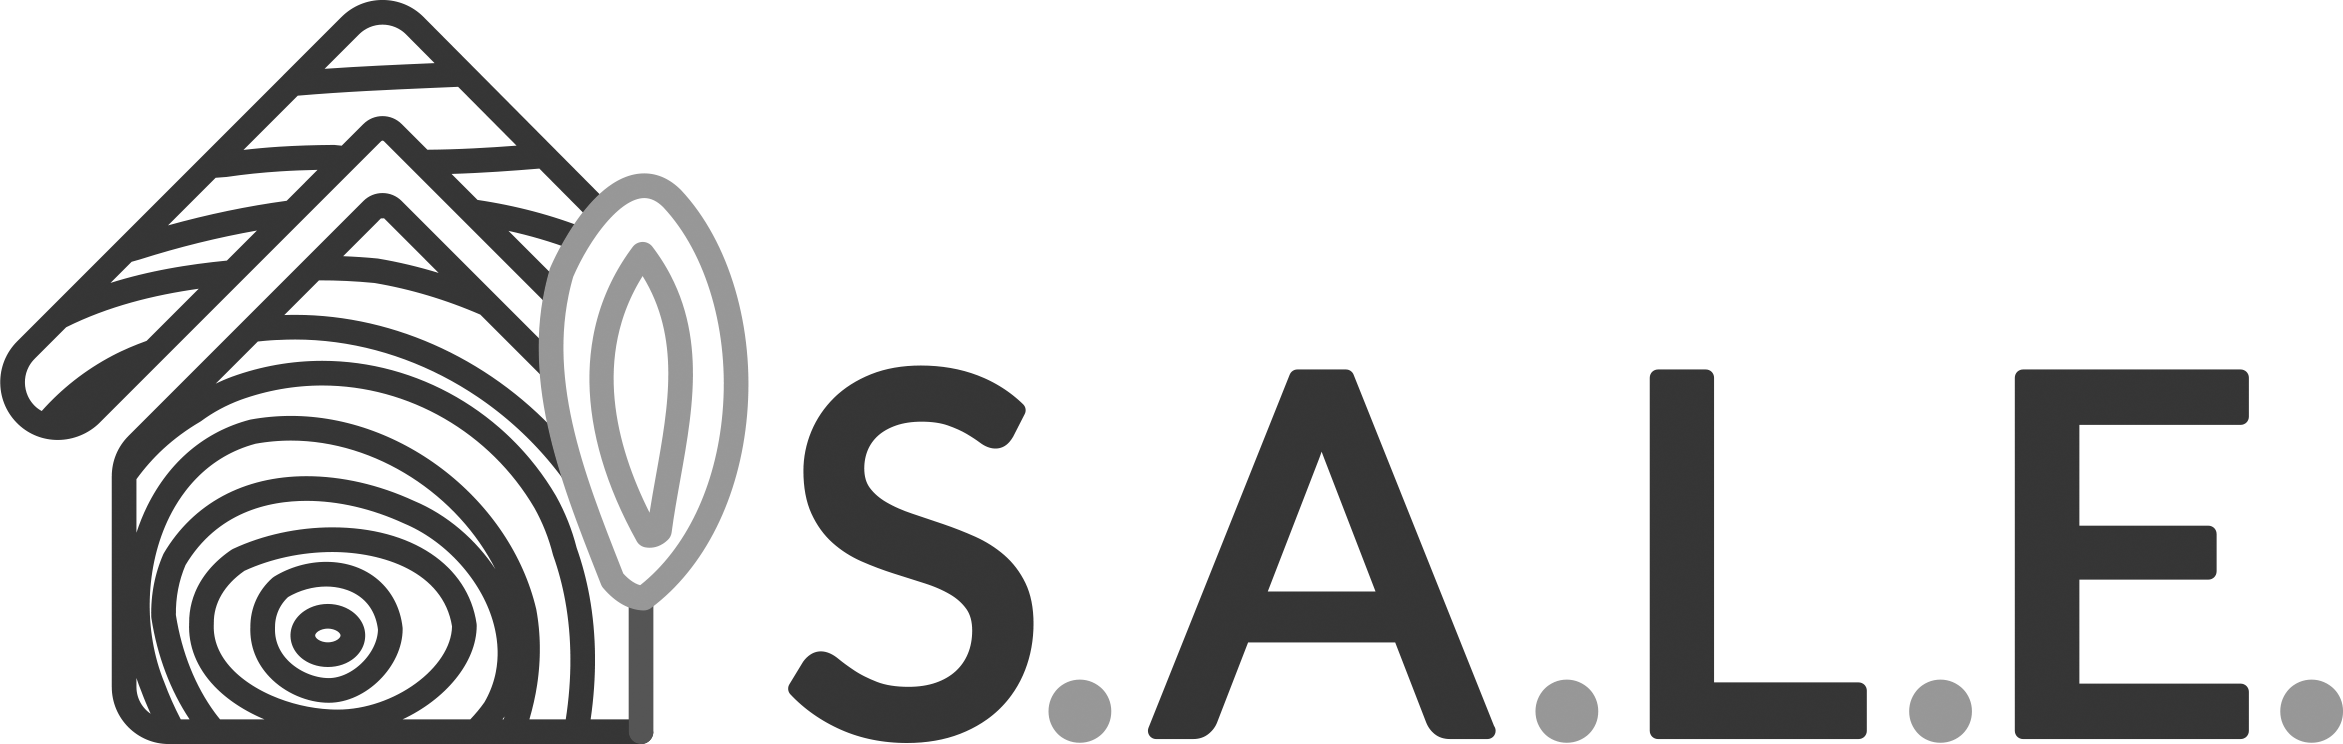 Logo Sale